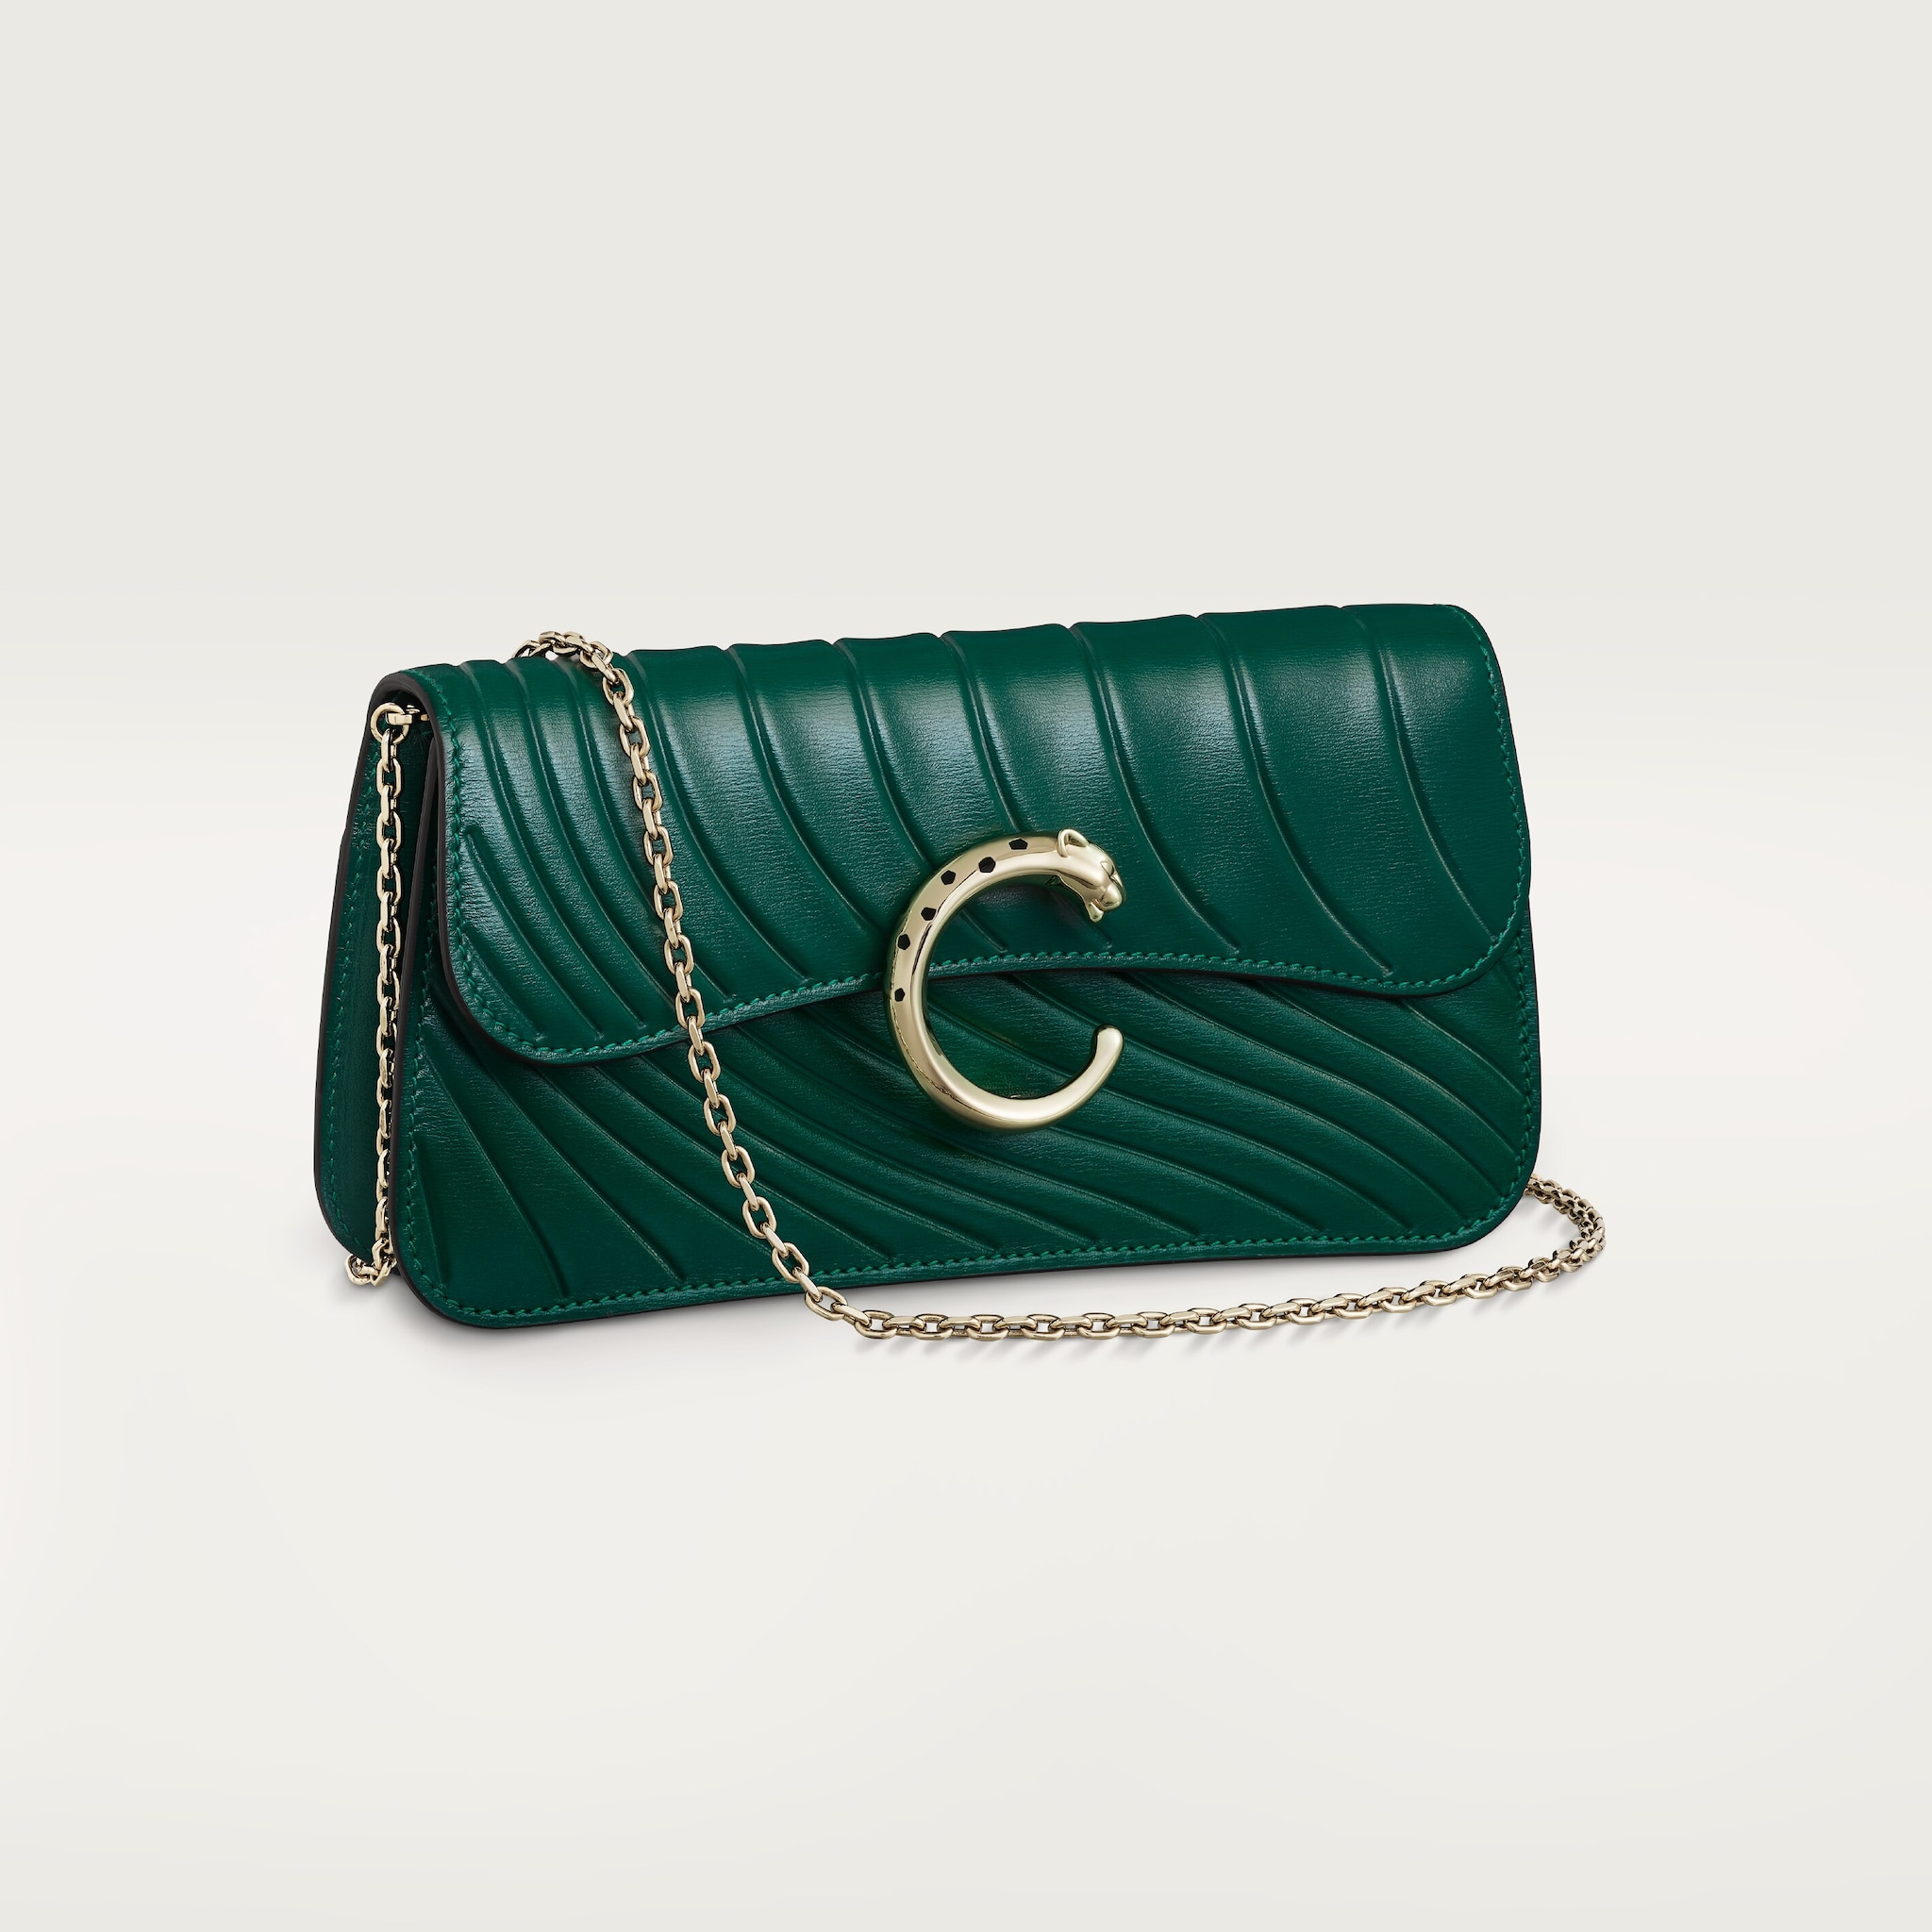 Chain bag mini, Panthère de CartierEmerald green calfskin with embossed Cartier signature motif, golden finish